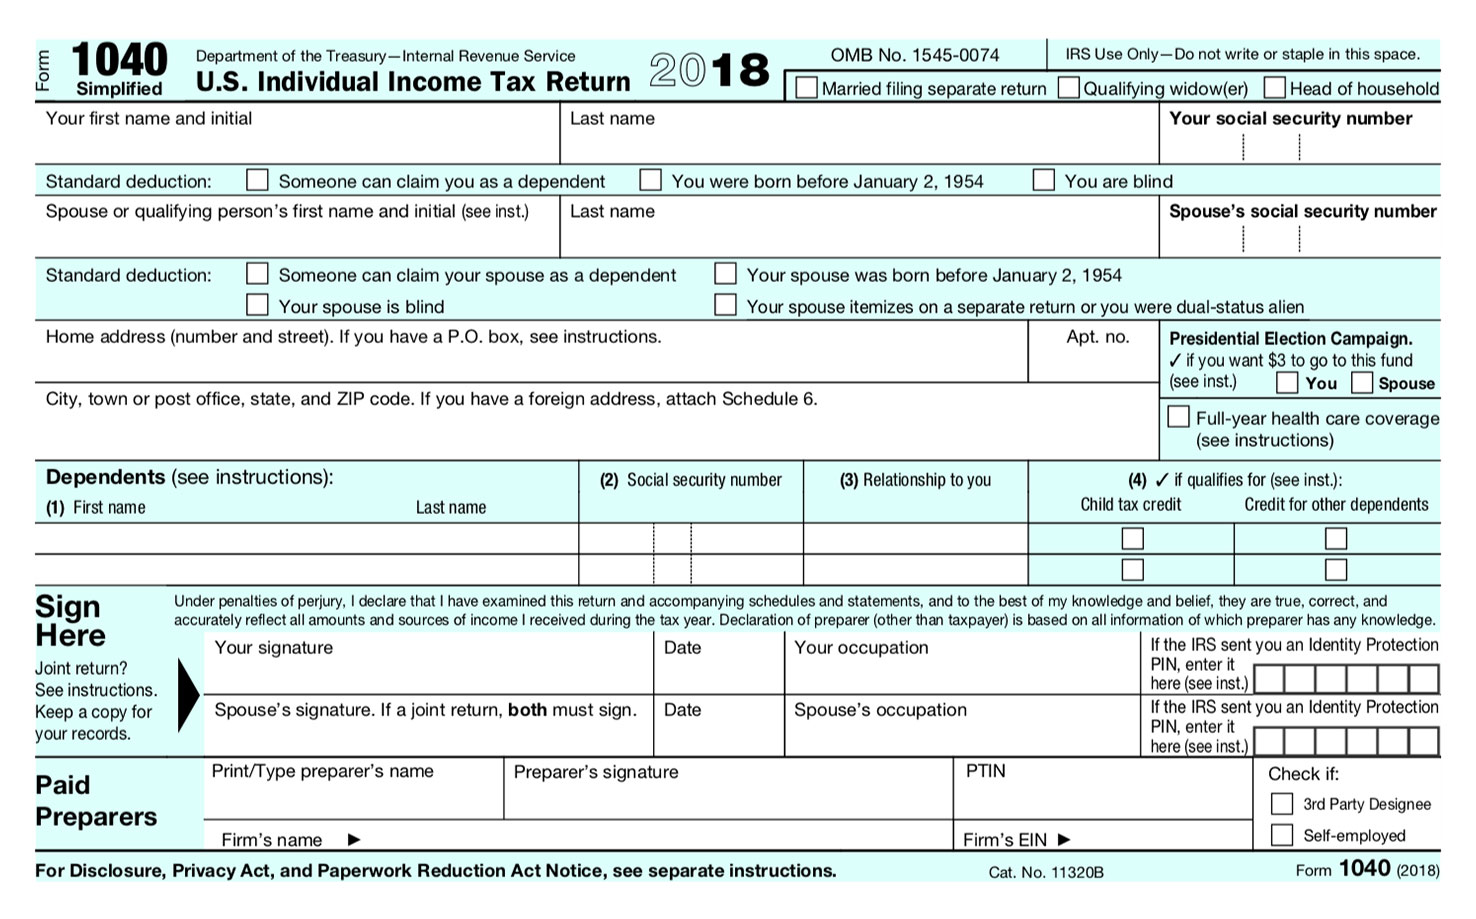 Simplified Tax Form? NESA